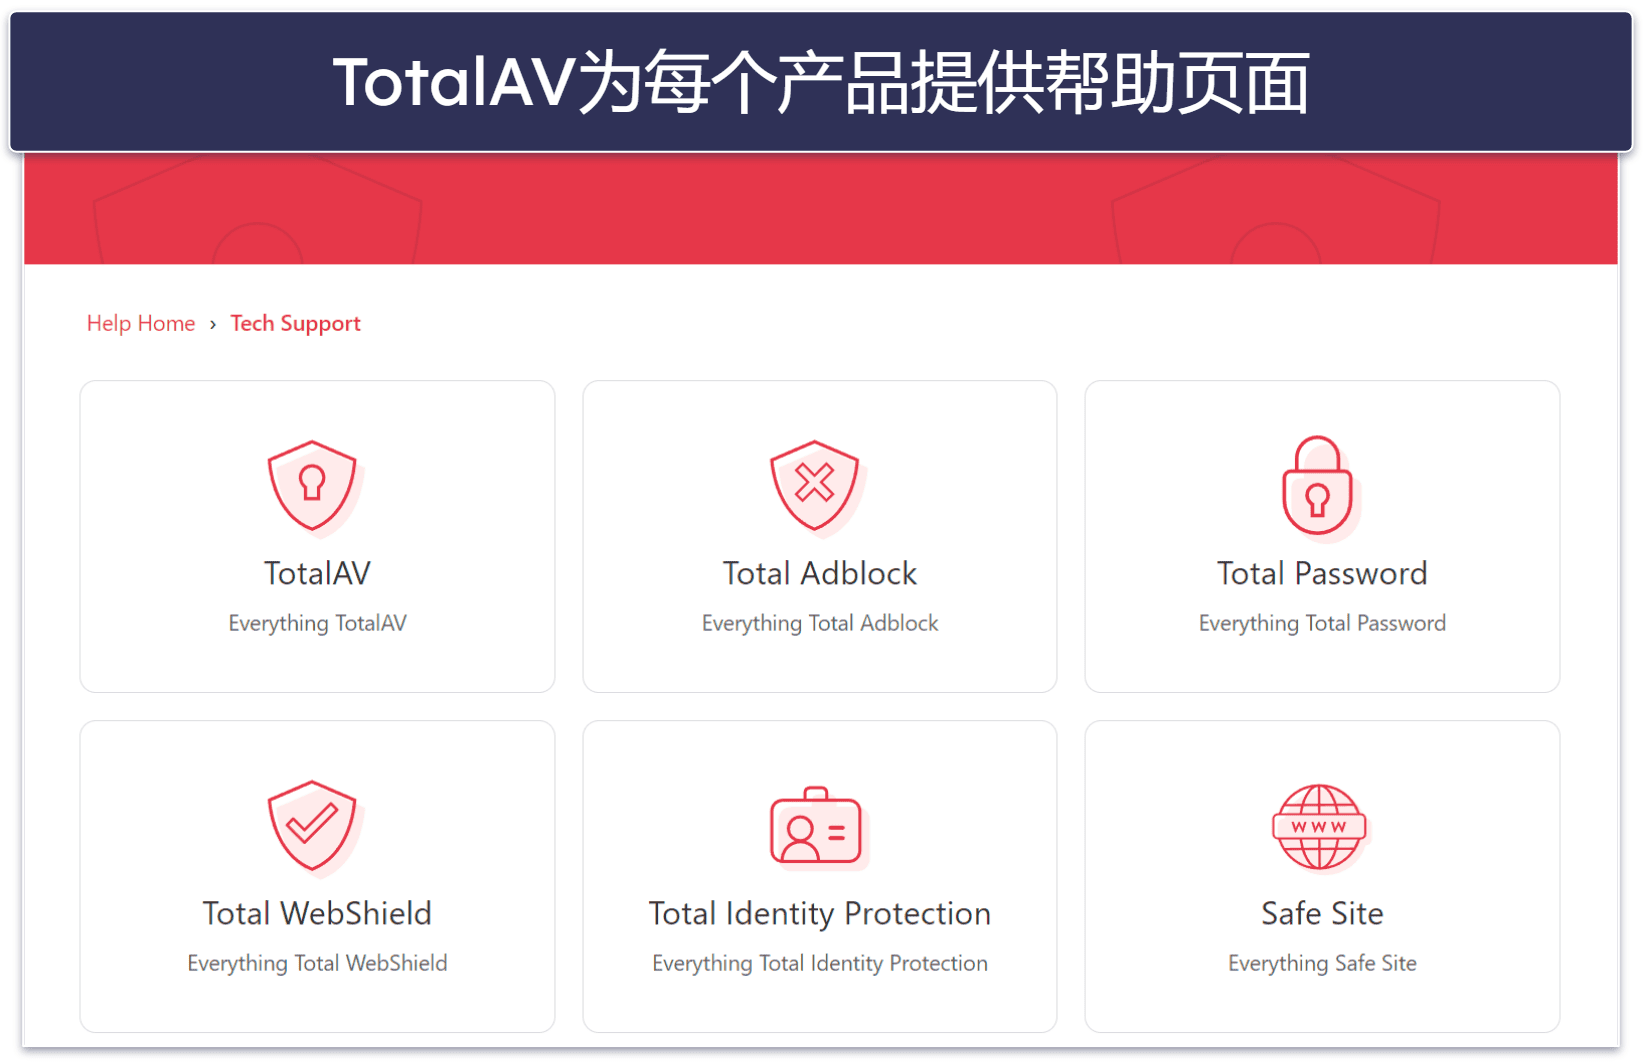 TotalAV客服支持